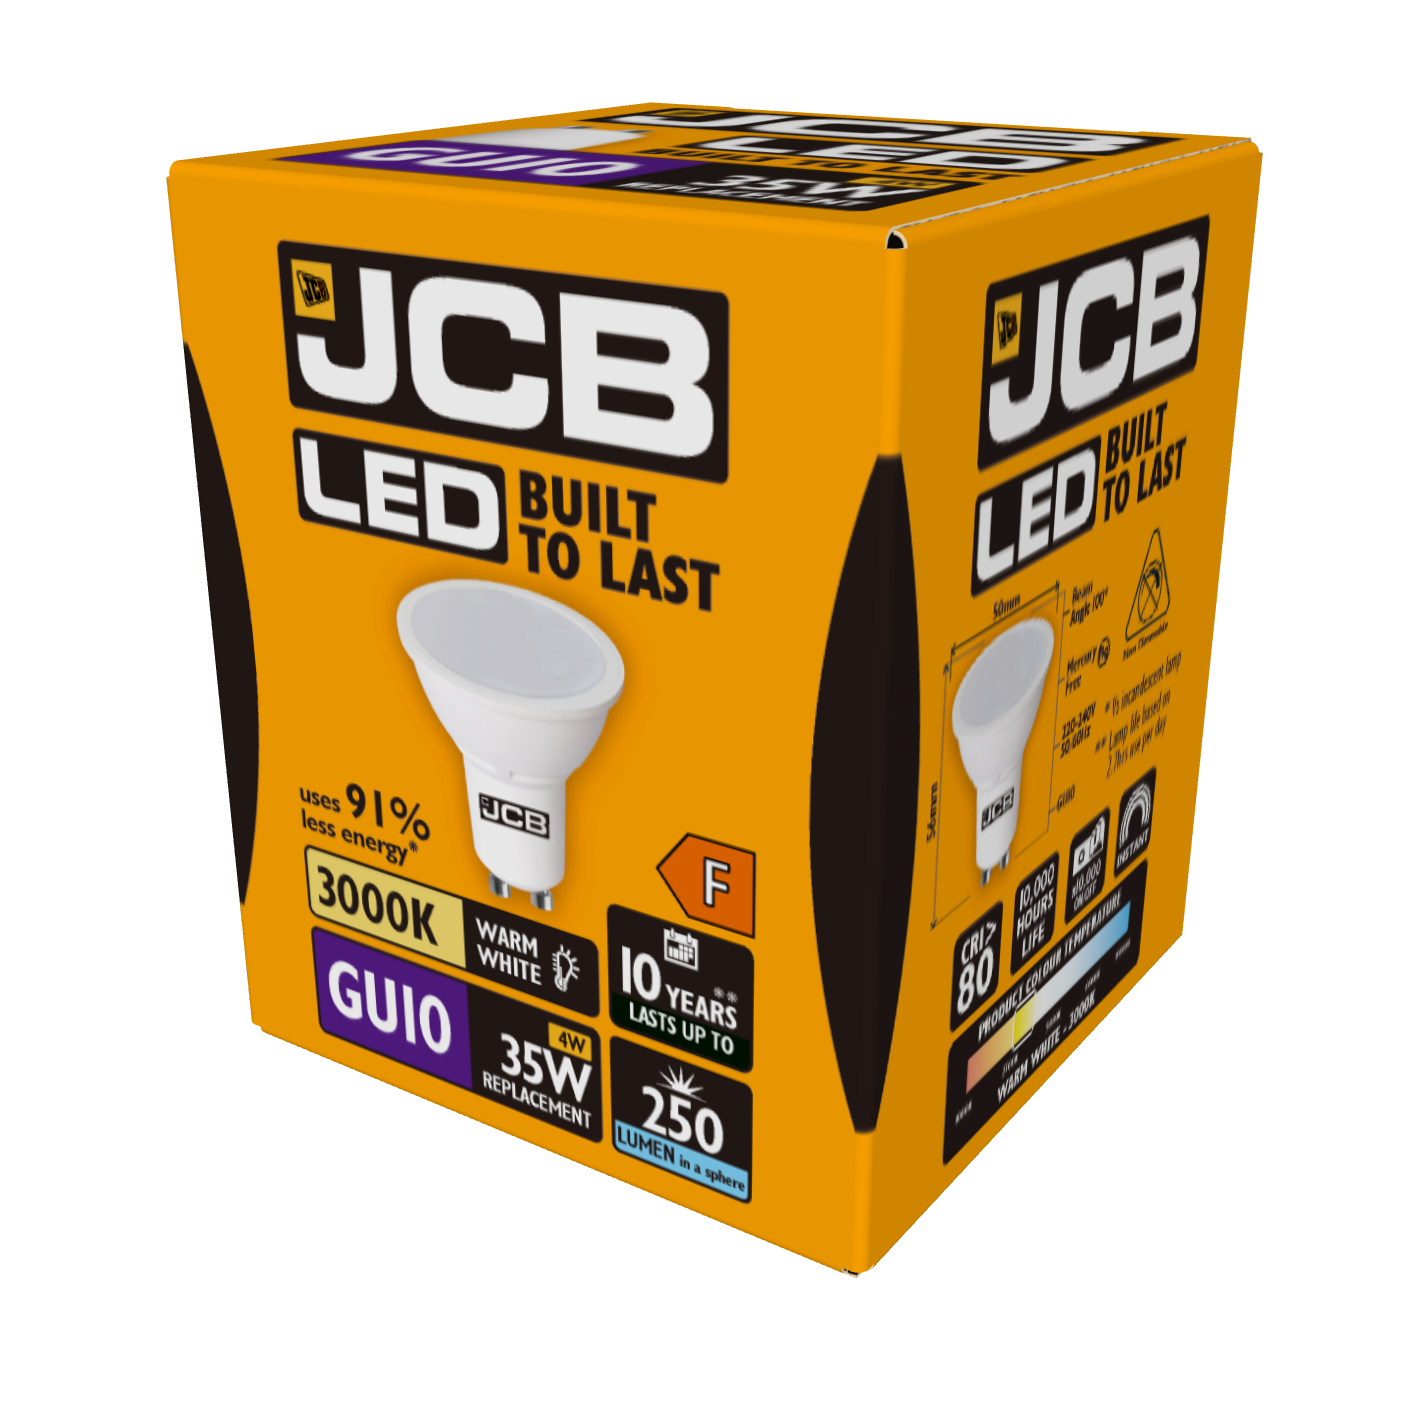 JCB LED GU10 250lm 4W 3,000K (Warm White), Box of 1